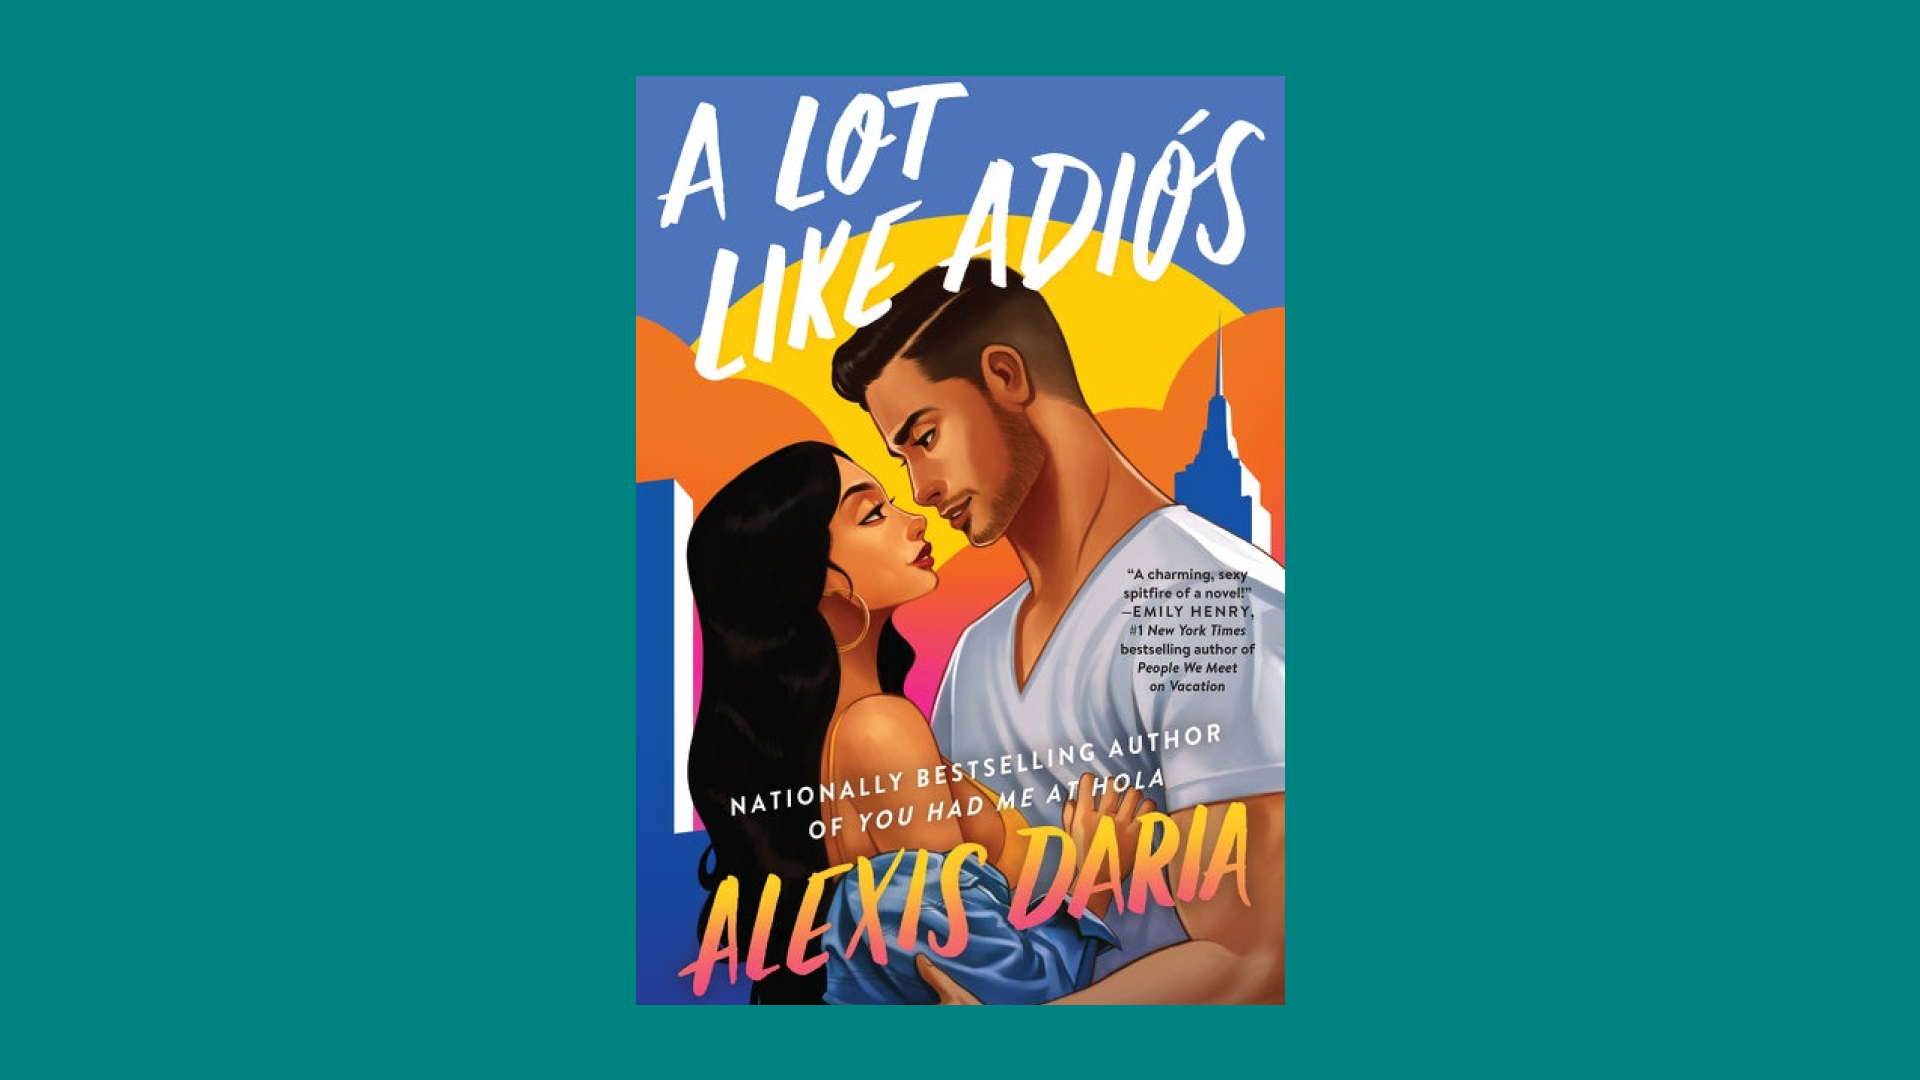 “A Lot Like Adiós” by Alexis Daria